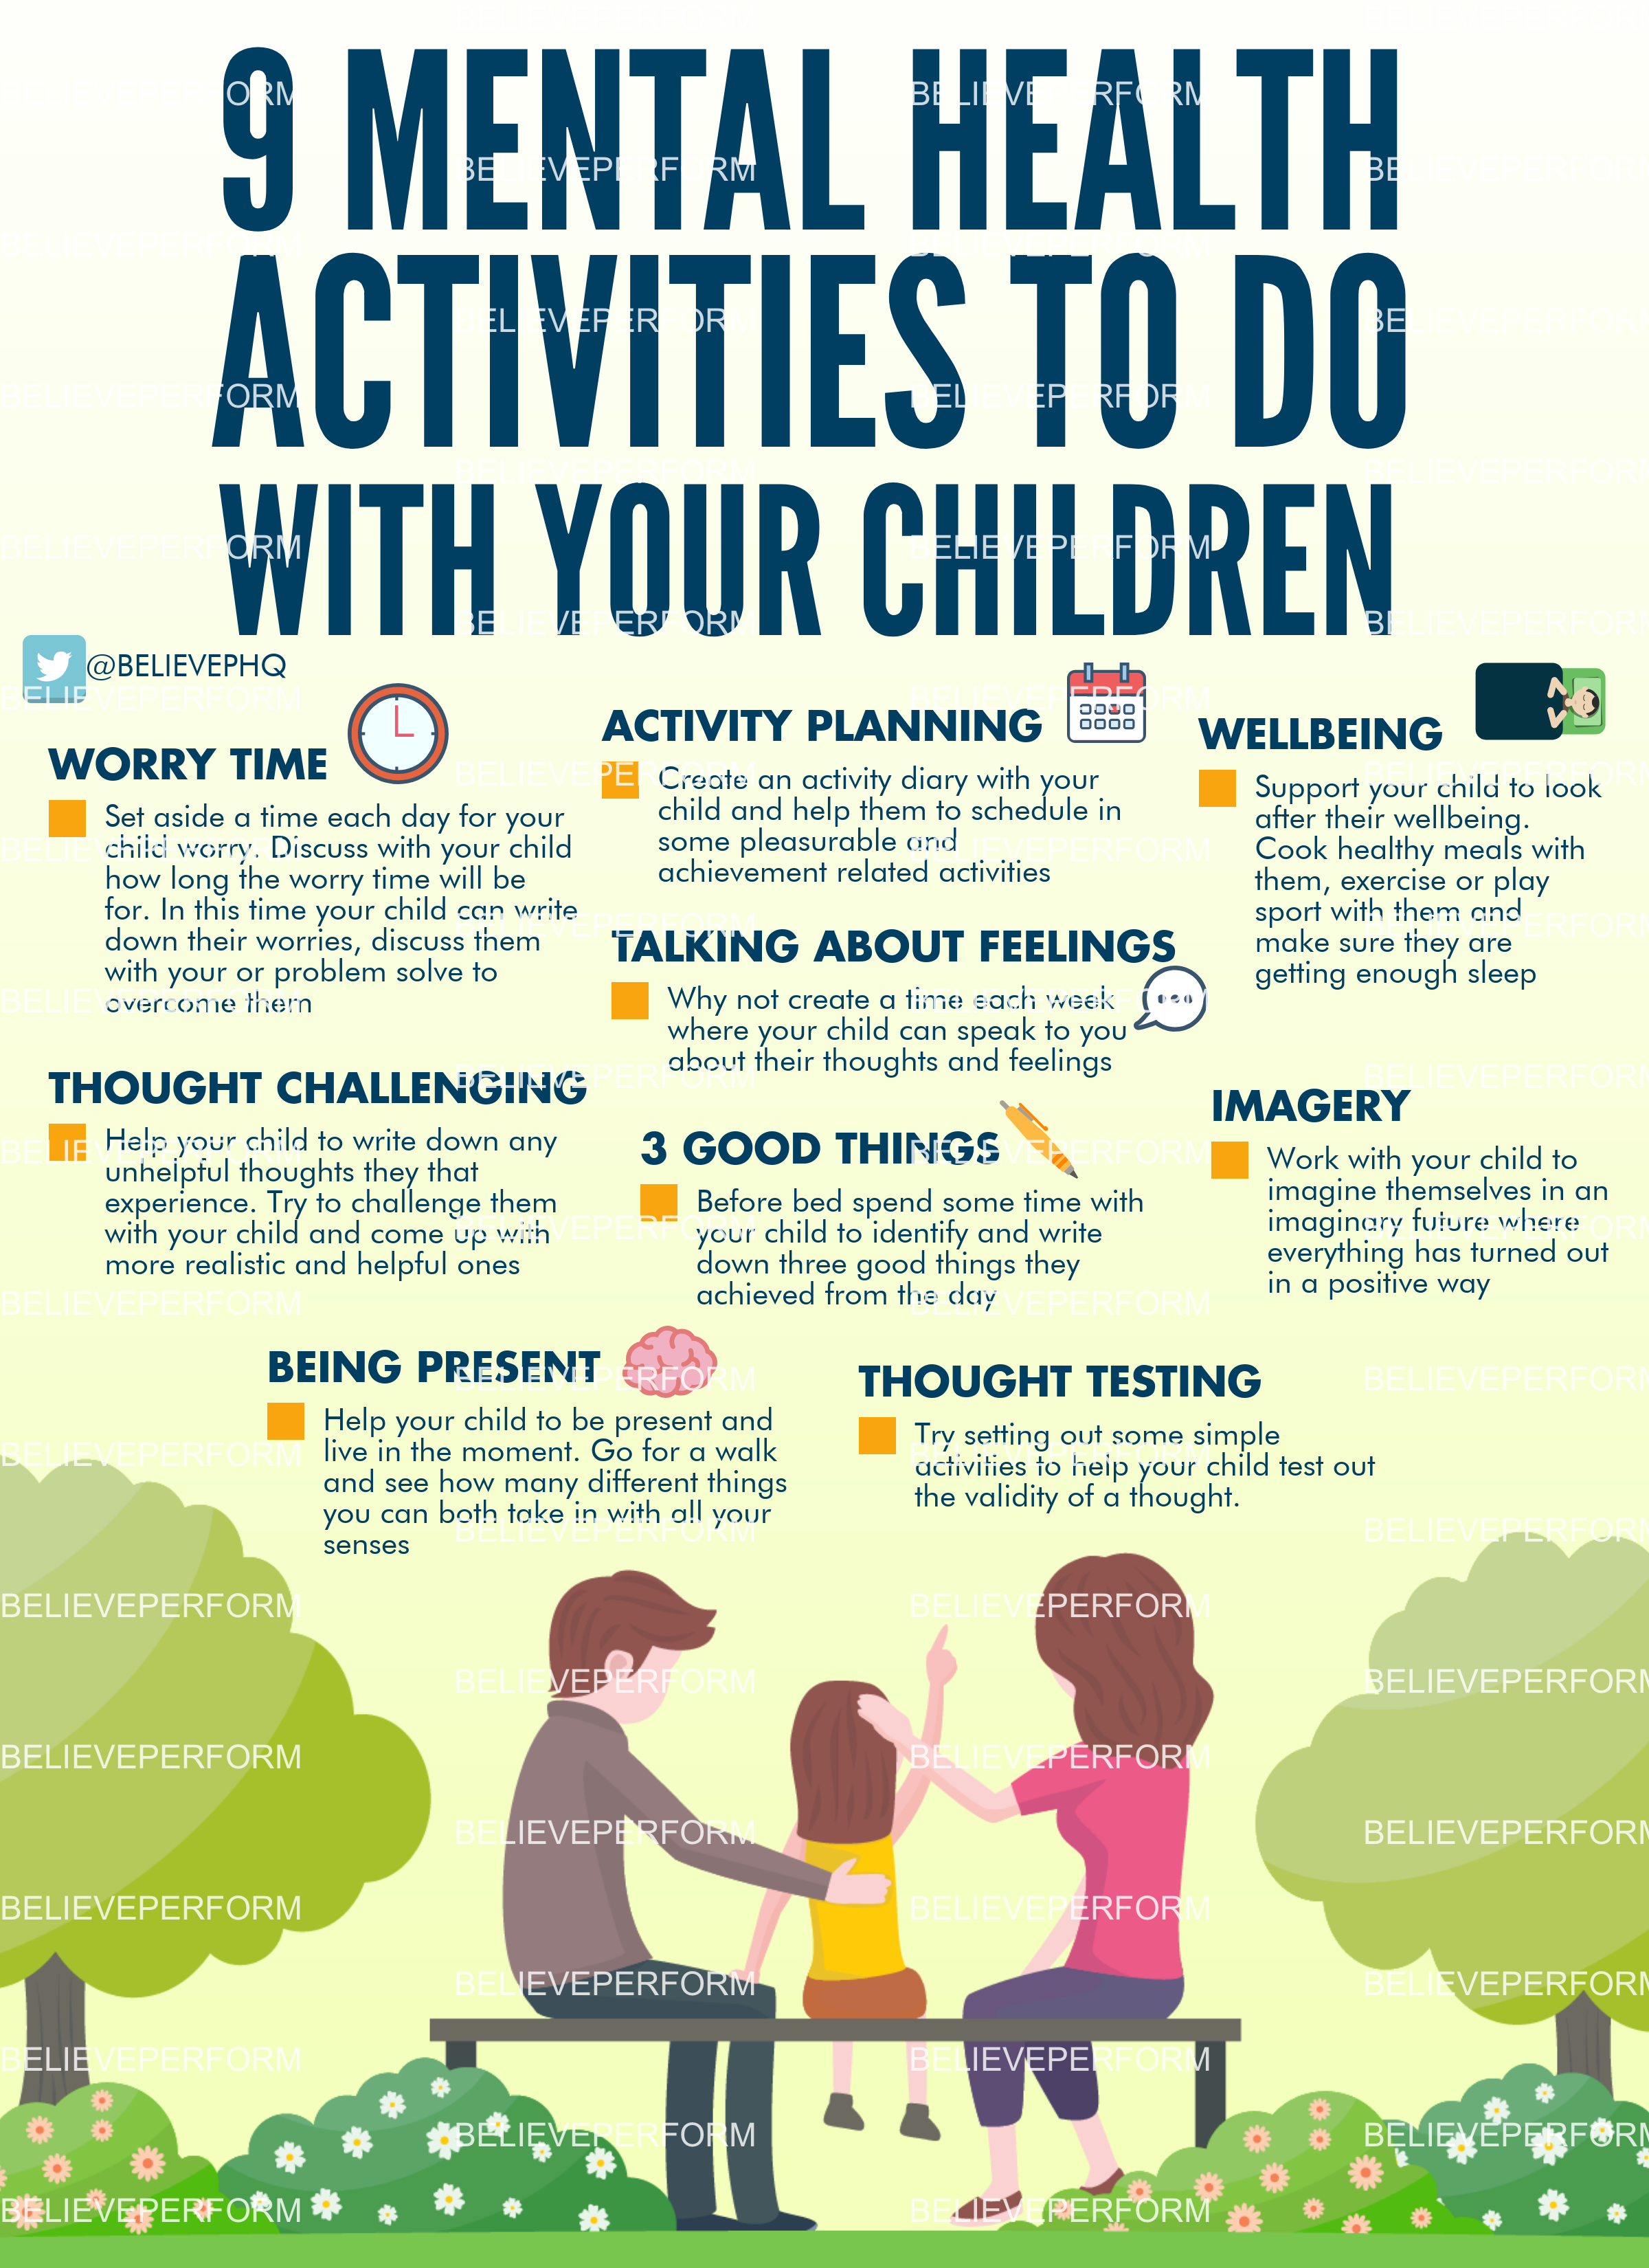 9-mental-health-activities-to-do-with-your-children-believeperform